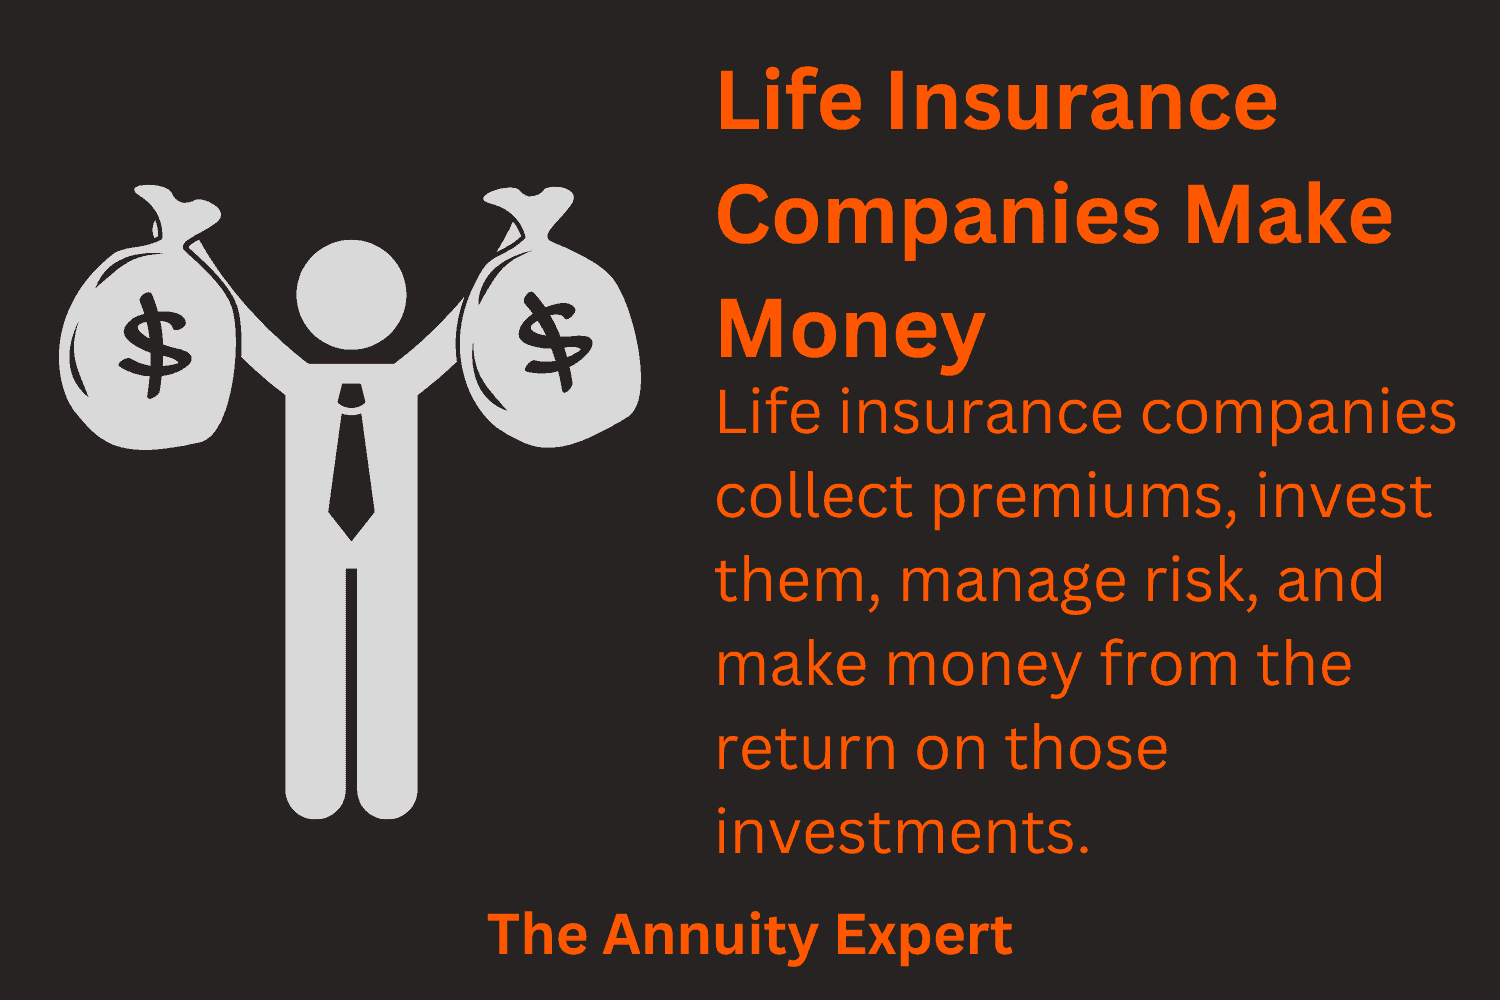 how do life insurance companies make money?